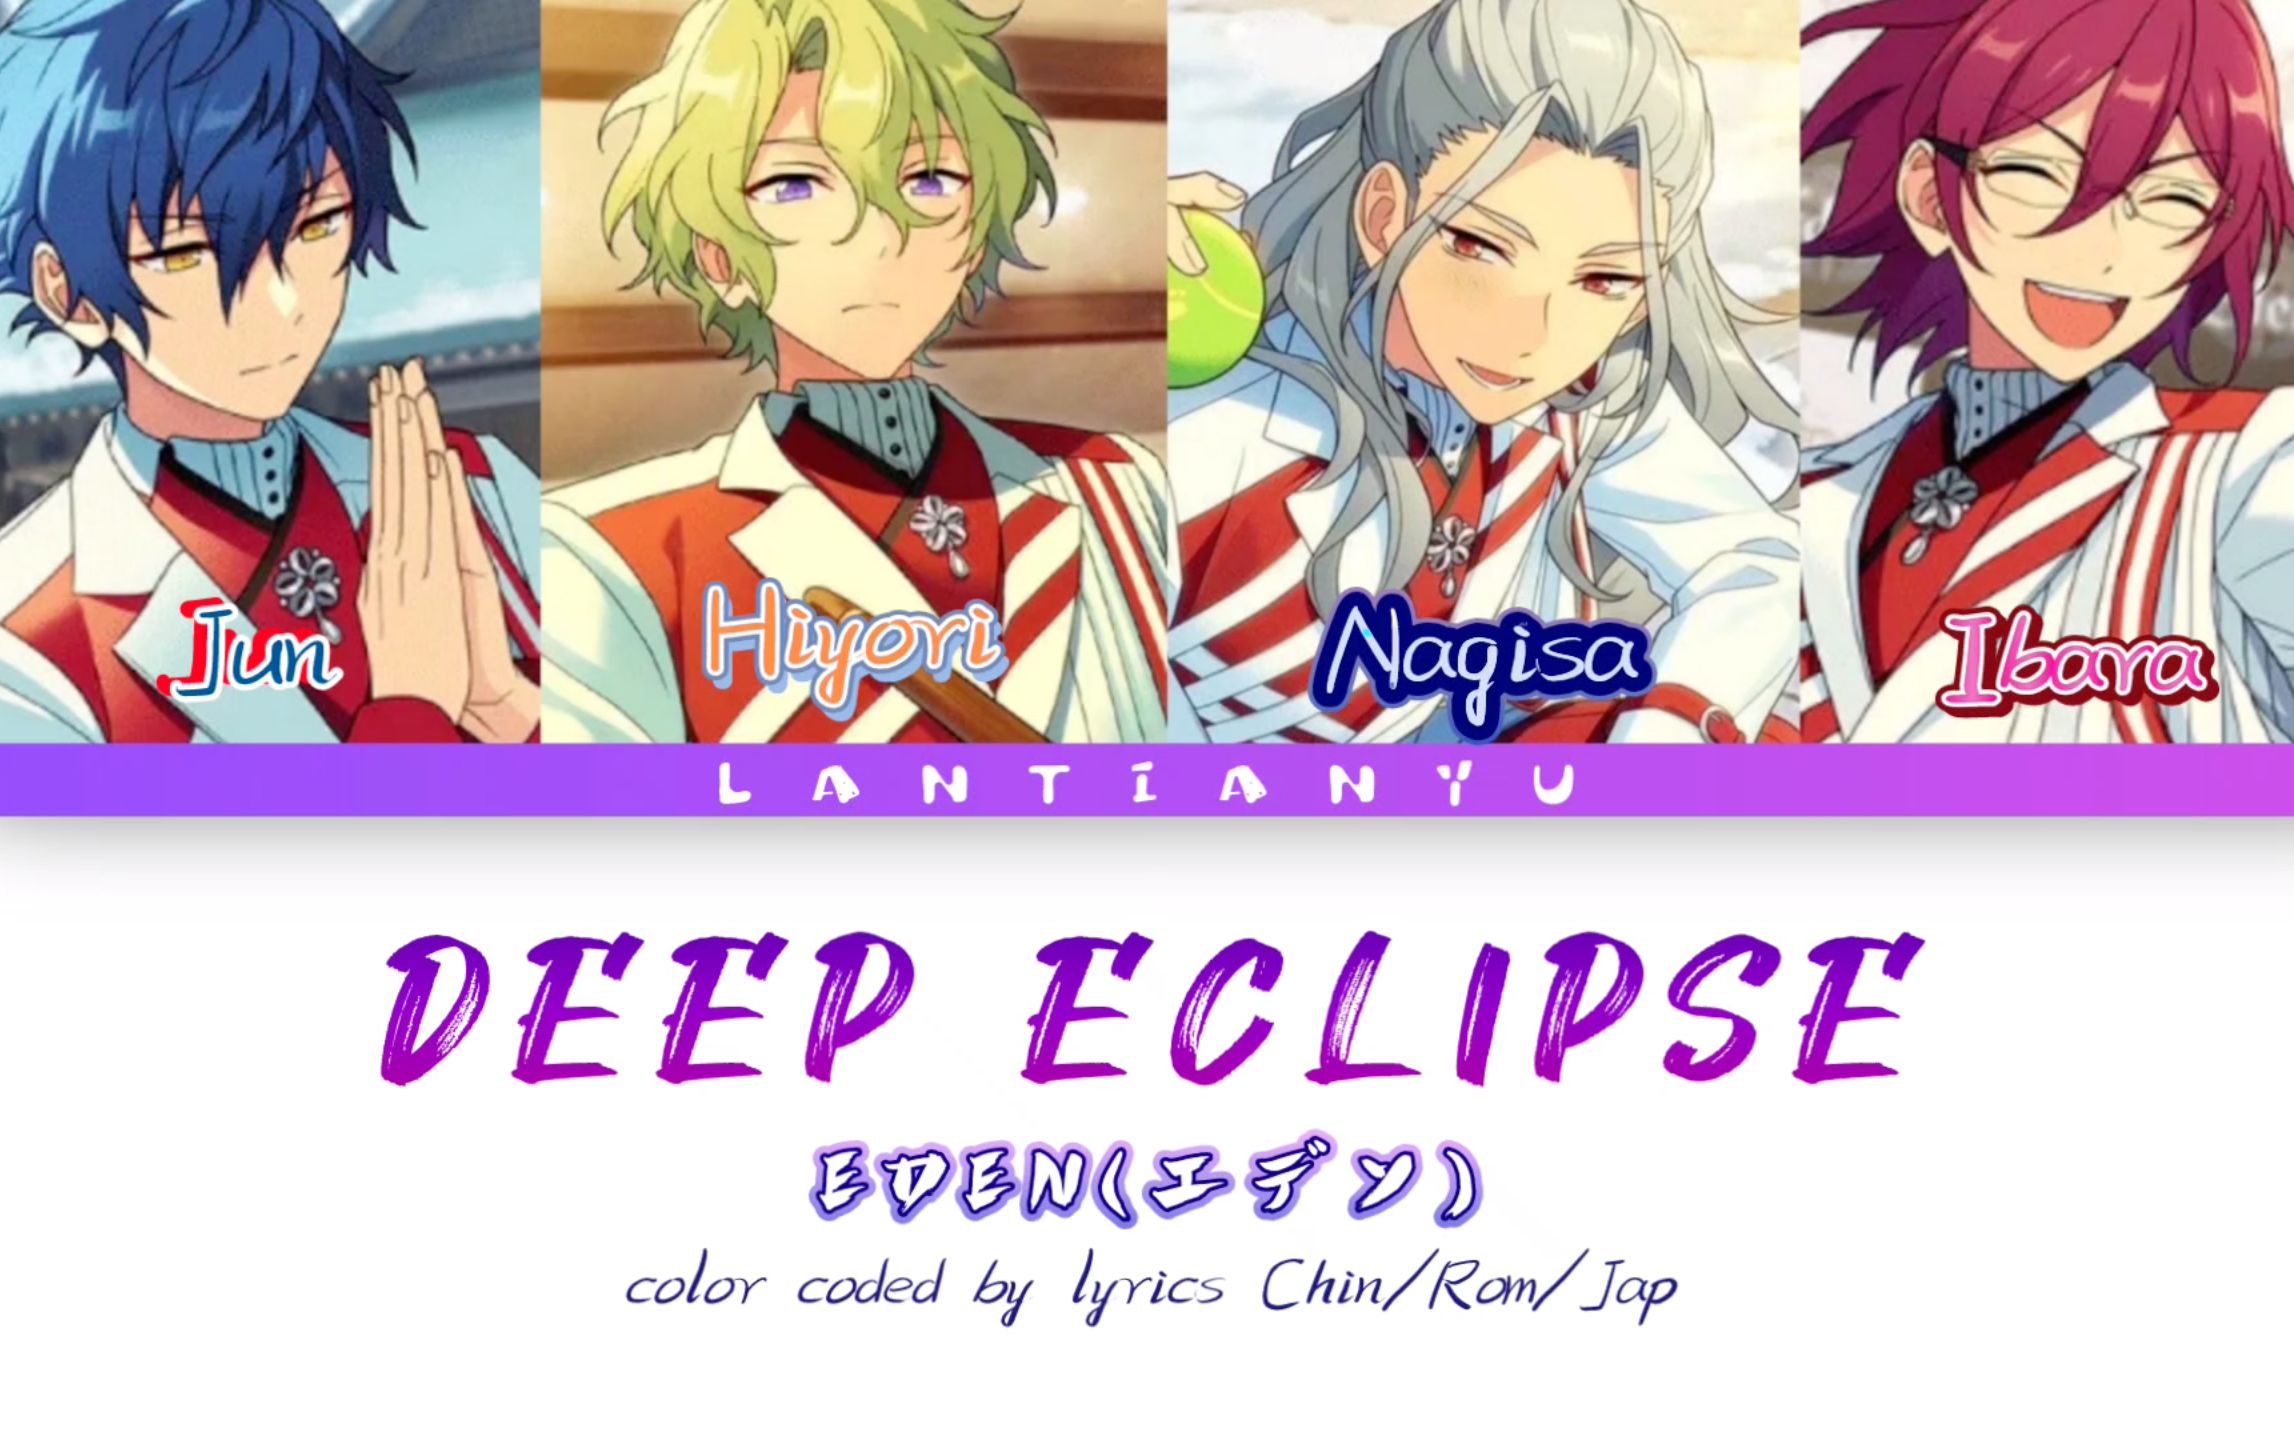 【Deep Eclipse】纯享完整版中日罗马音三语歌词/Eden/左右声道耳机体验更佳:D